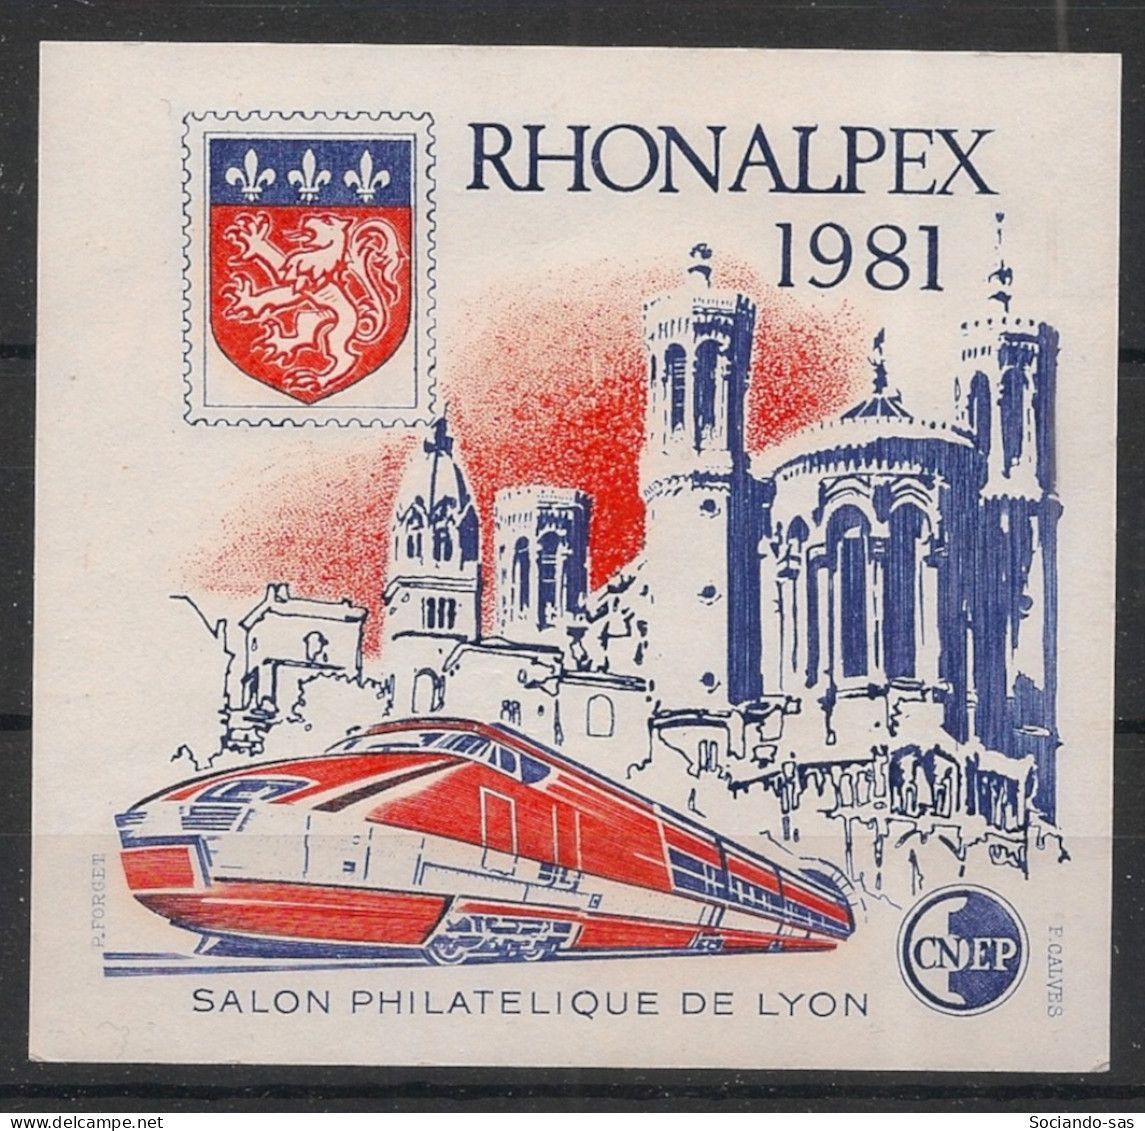 FRANCE - 1981 - Bloc Feuillet CNEP N°YT. 2 - Rhonalpex - Neuf Luxe ** / MNH / Postfrisch - CNEP